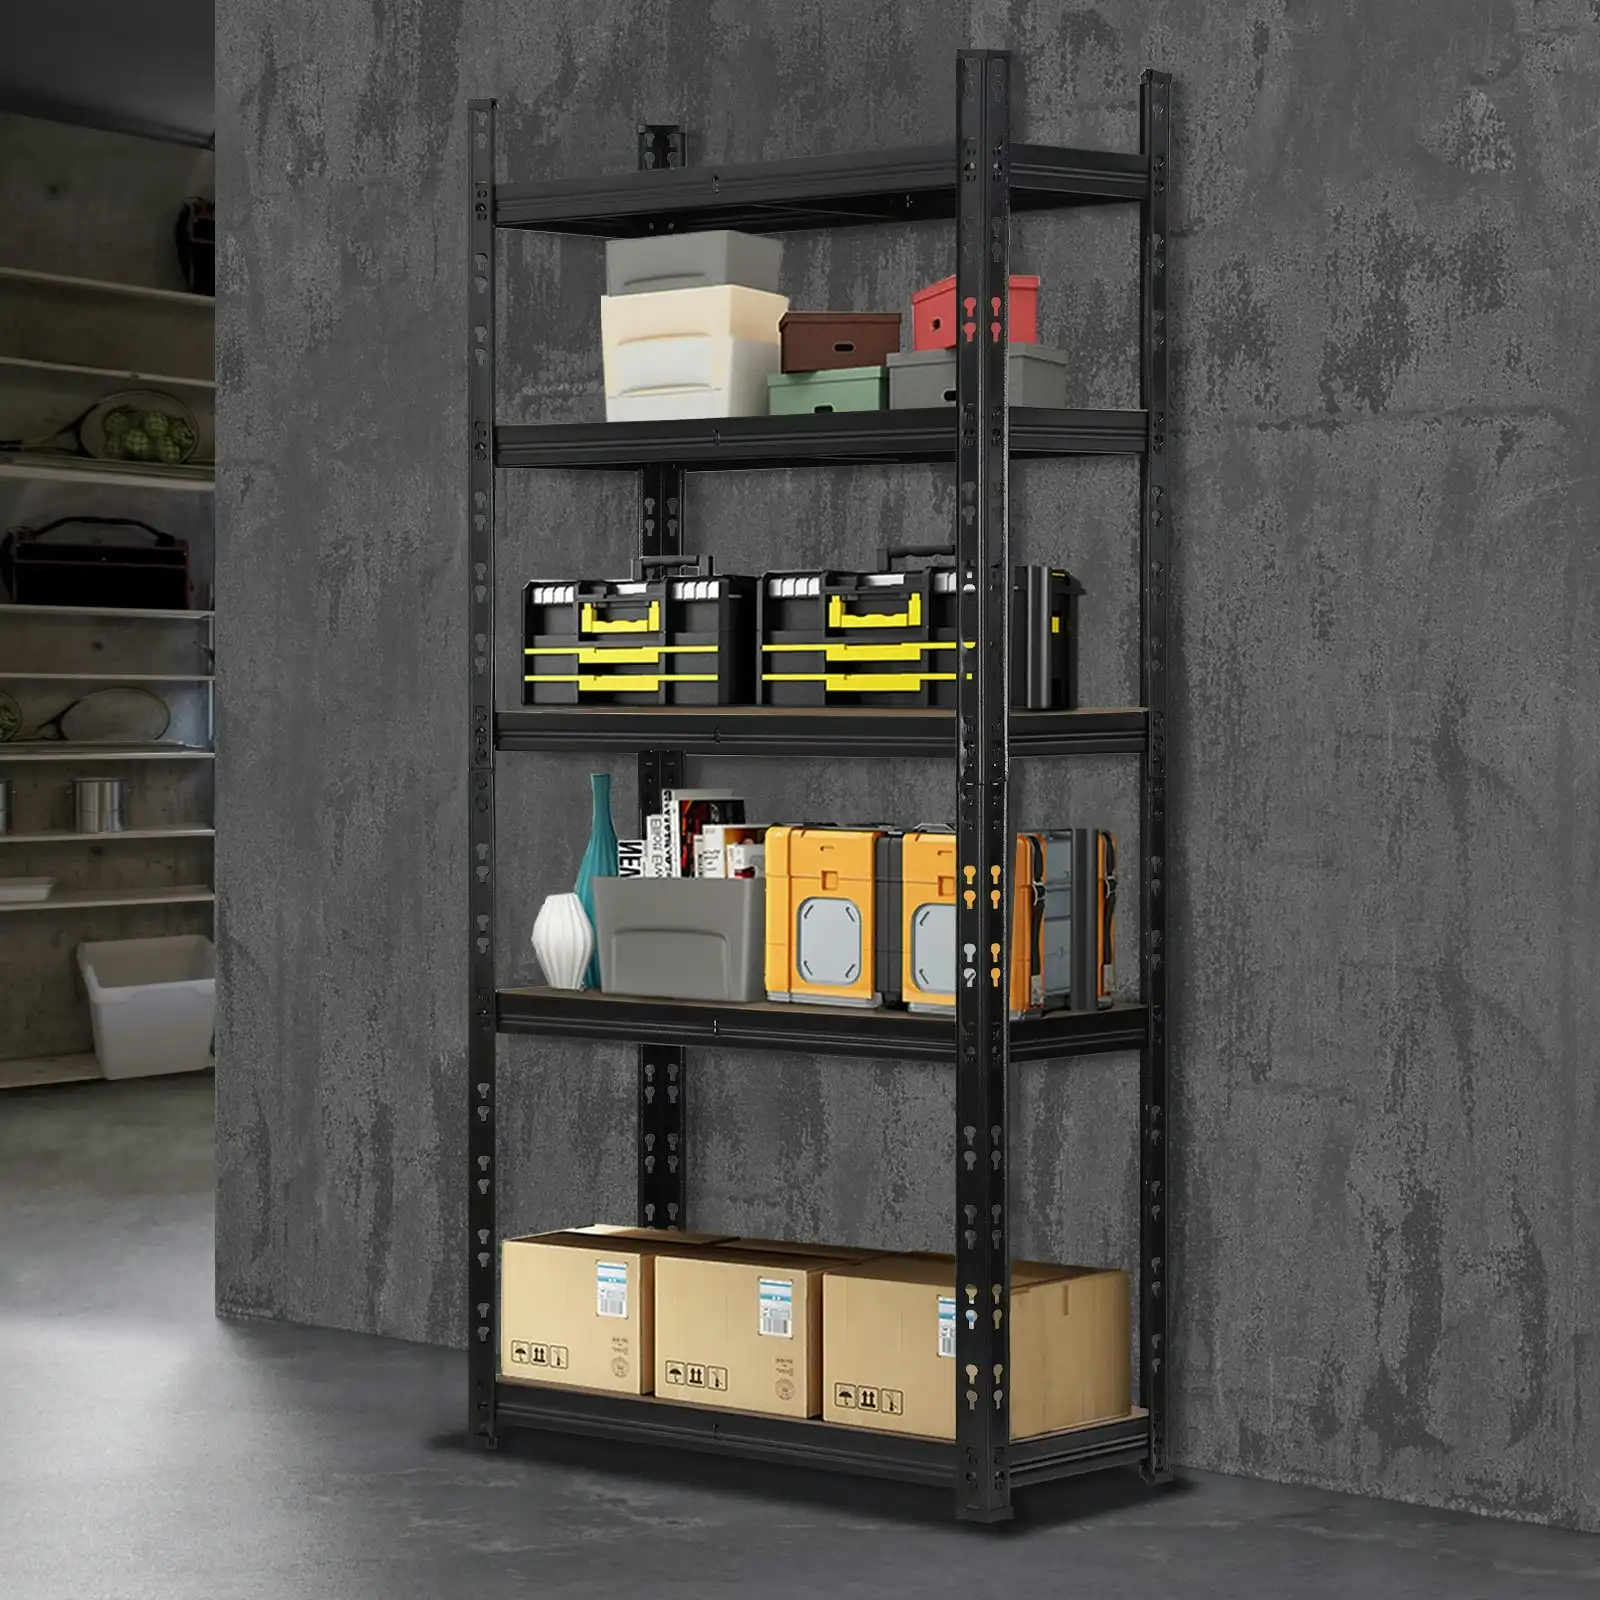 Sharptoo Garage Shelving Warehouse Shelves Storage Rack Pallet Racking 1.8*1.2m Black